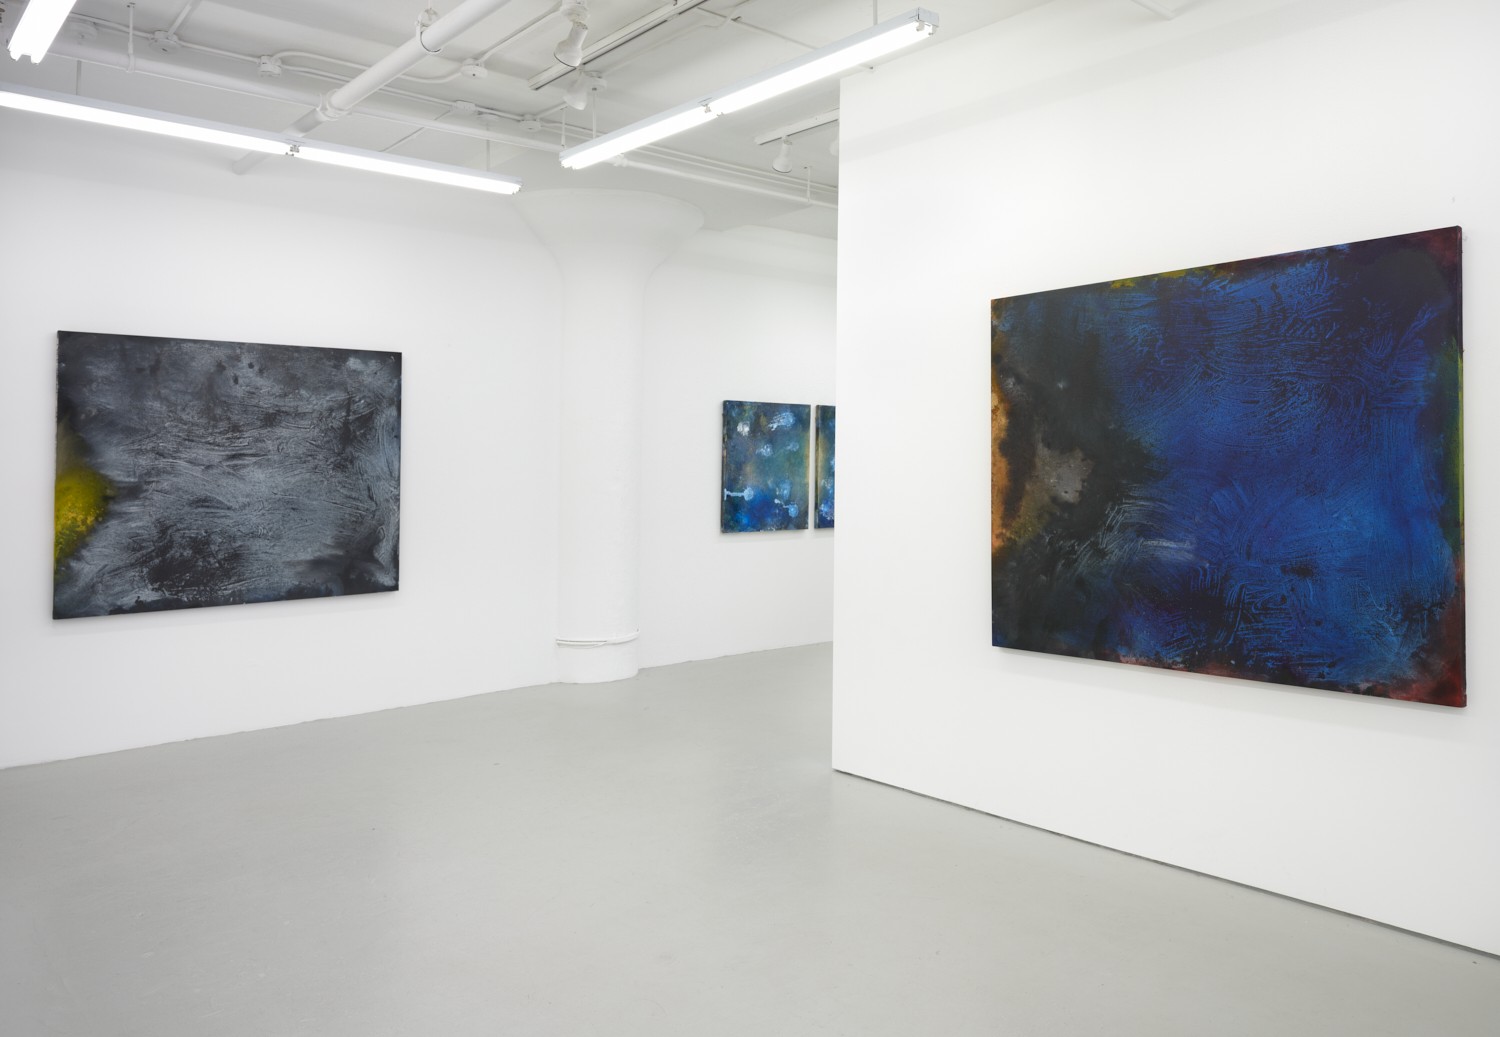 Installation image for Ben Woolfitt: Blue Passage, at David Richard Gallery